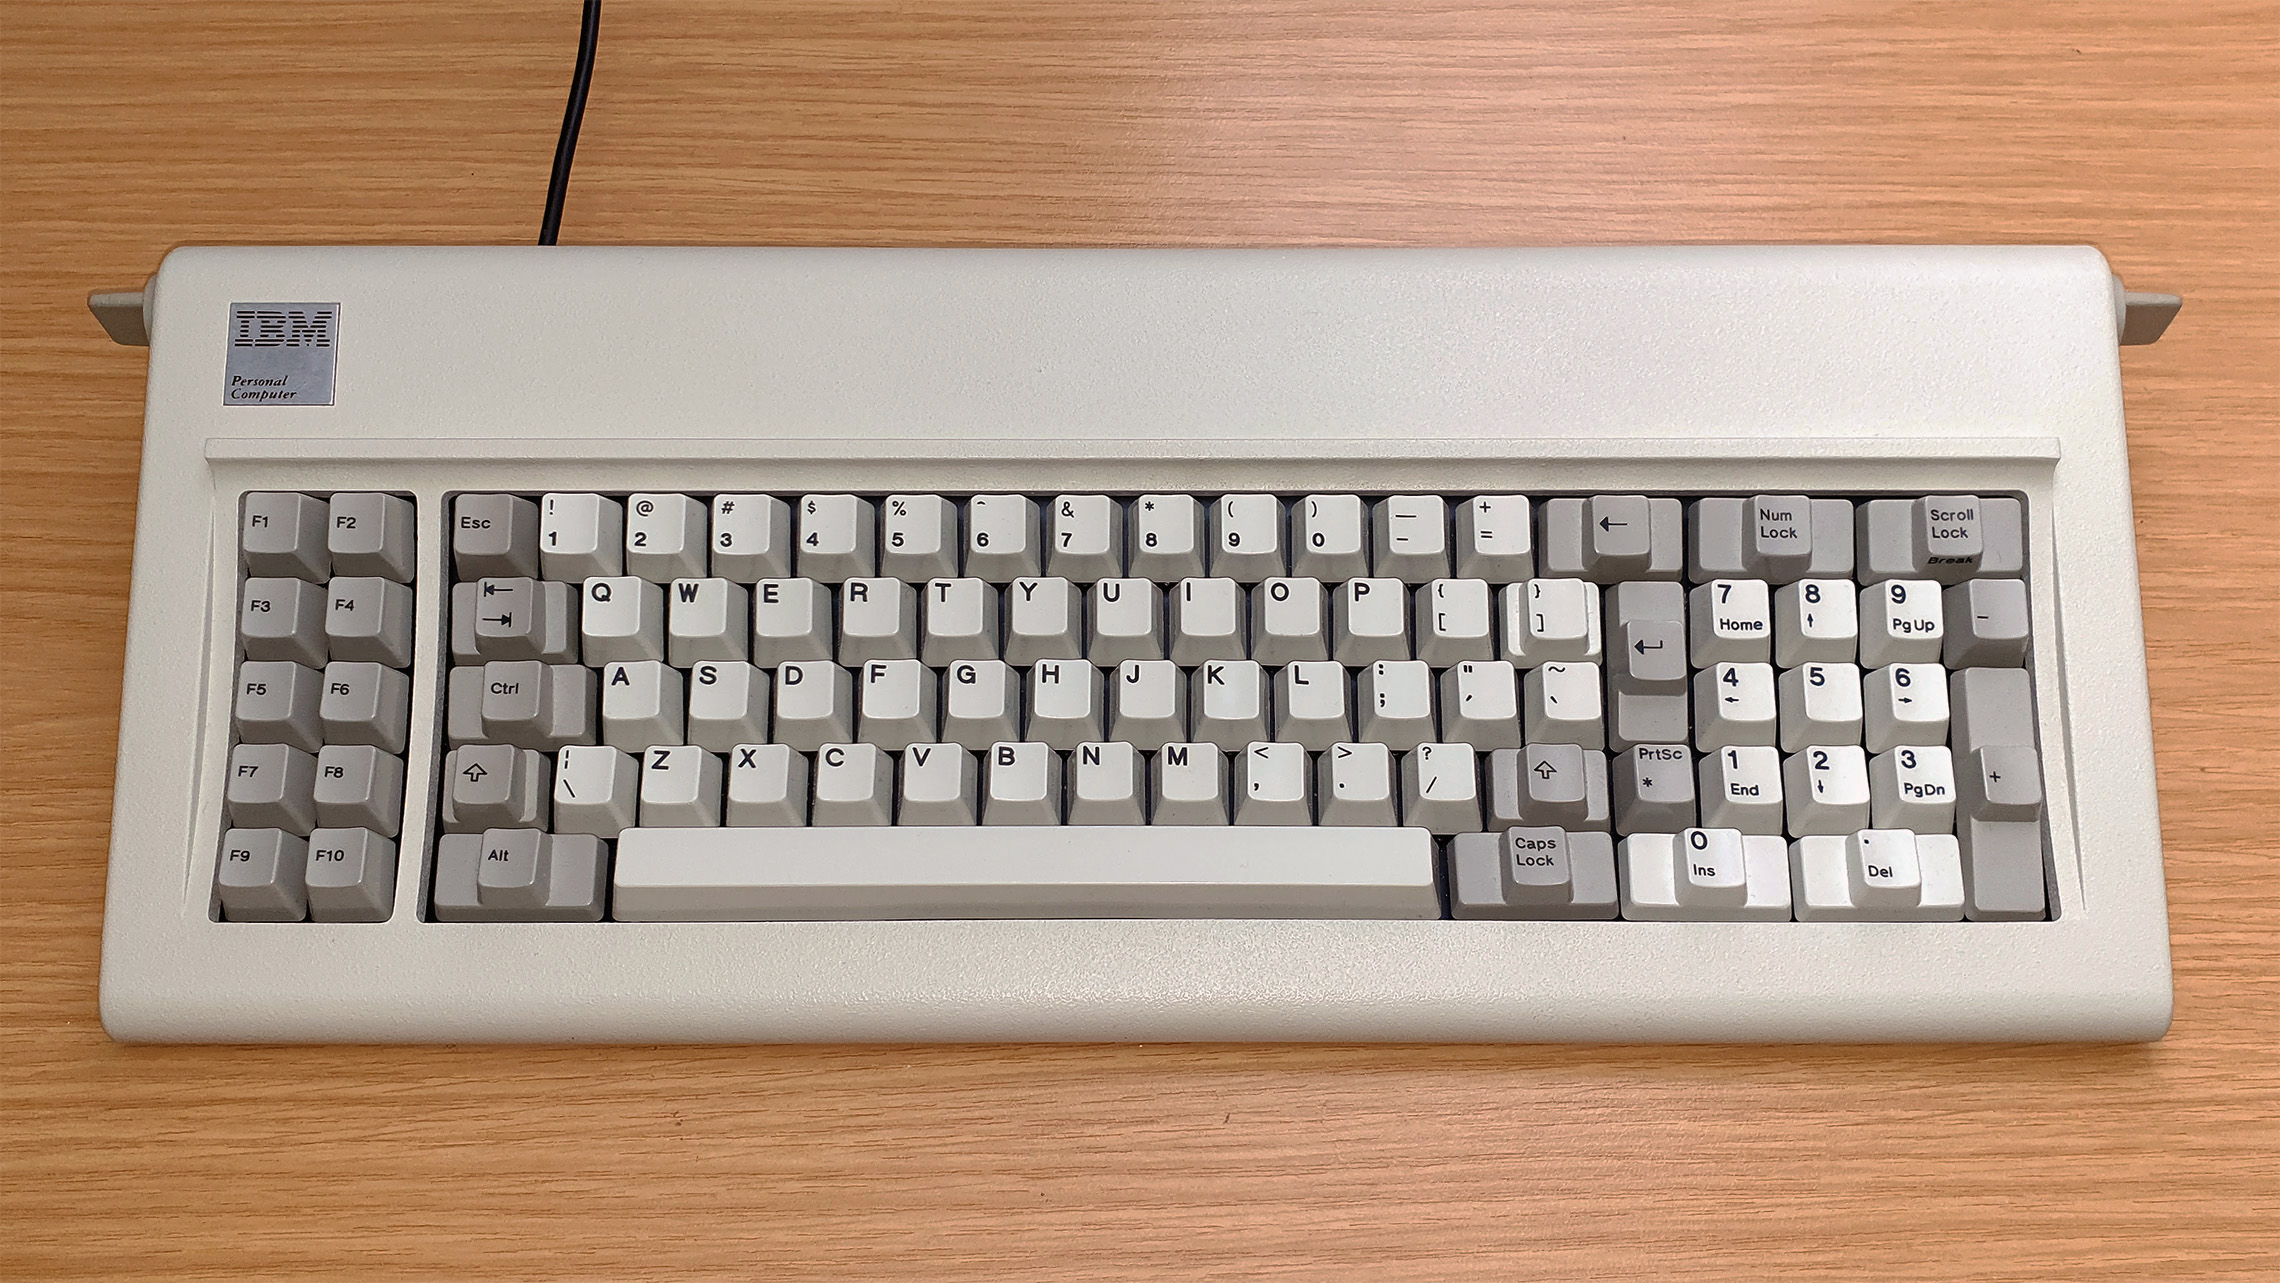 IBM Personal Computer Keyboard